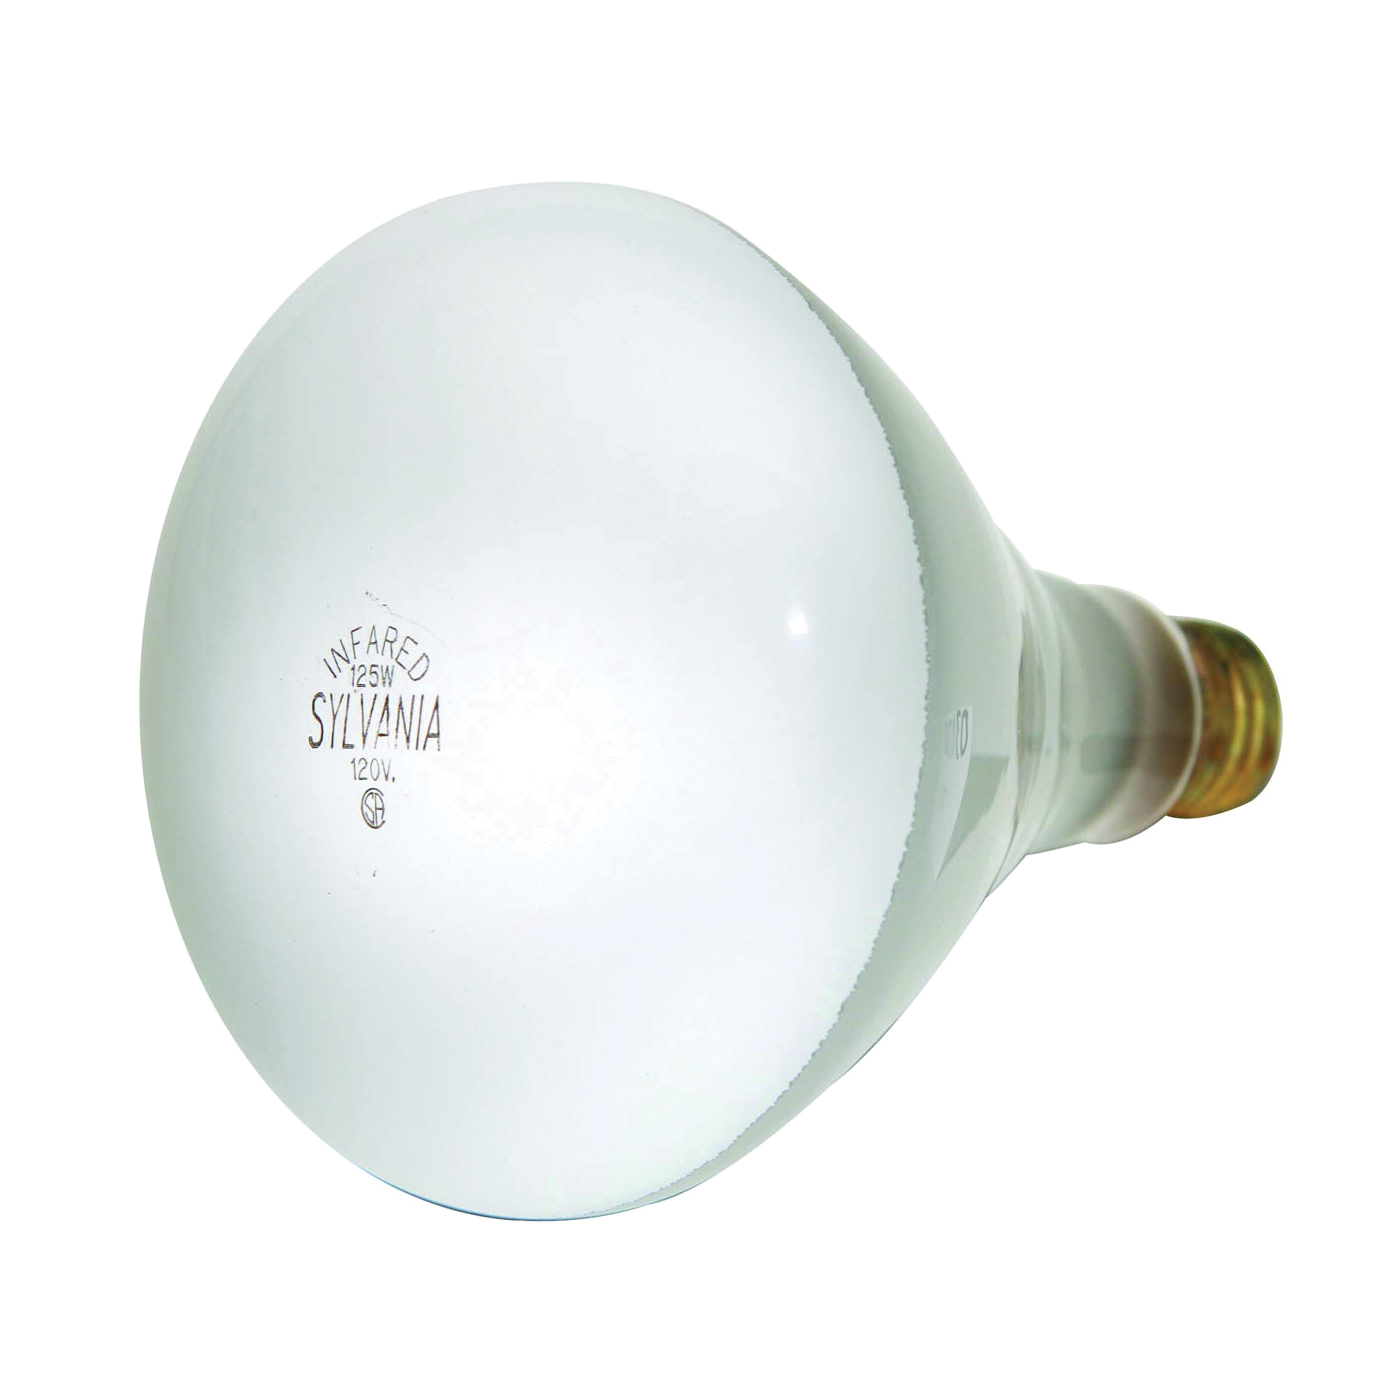 15451 Incandescent Lamp, 125 W, BR40 Lamp, Medium E26 Lamp Base, 1000 Lumens Lumens, 2850 K Color Temp